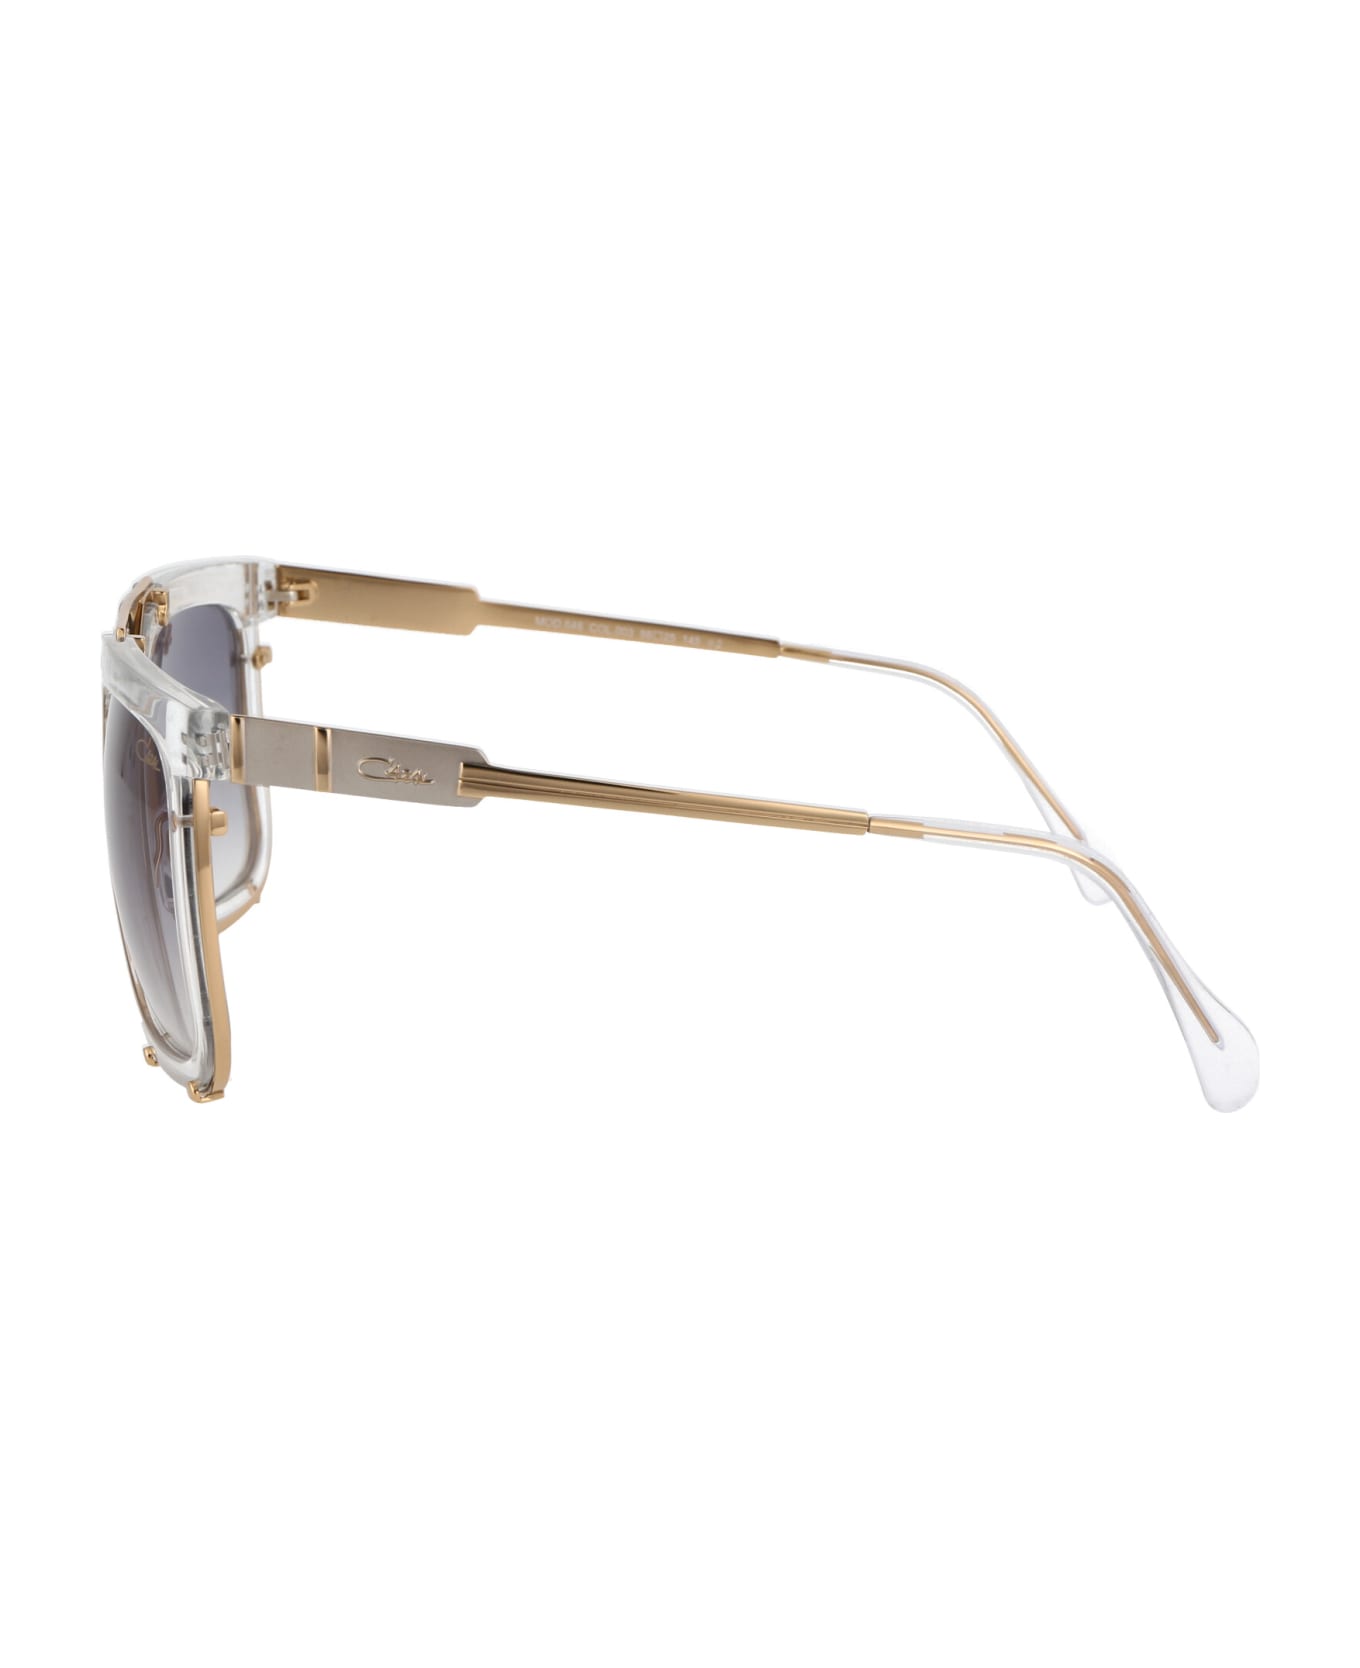 Cazal Mod. 648 Sunglasses - 003 CRYSTAL サングラス